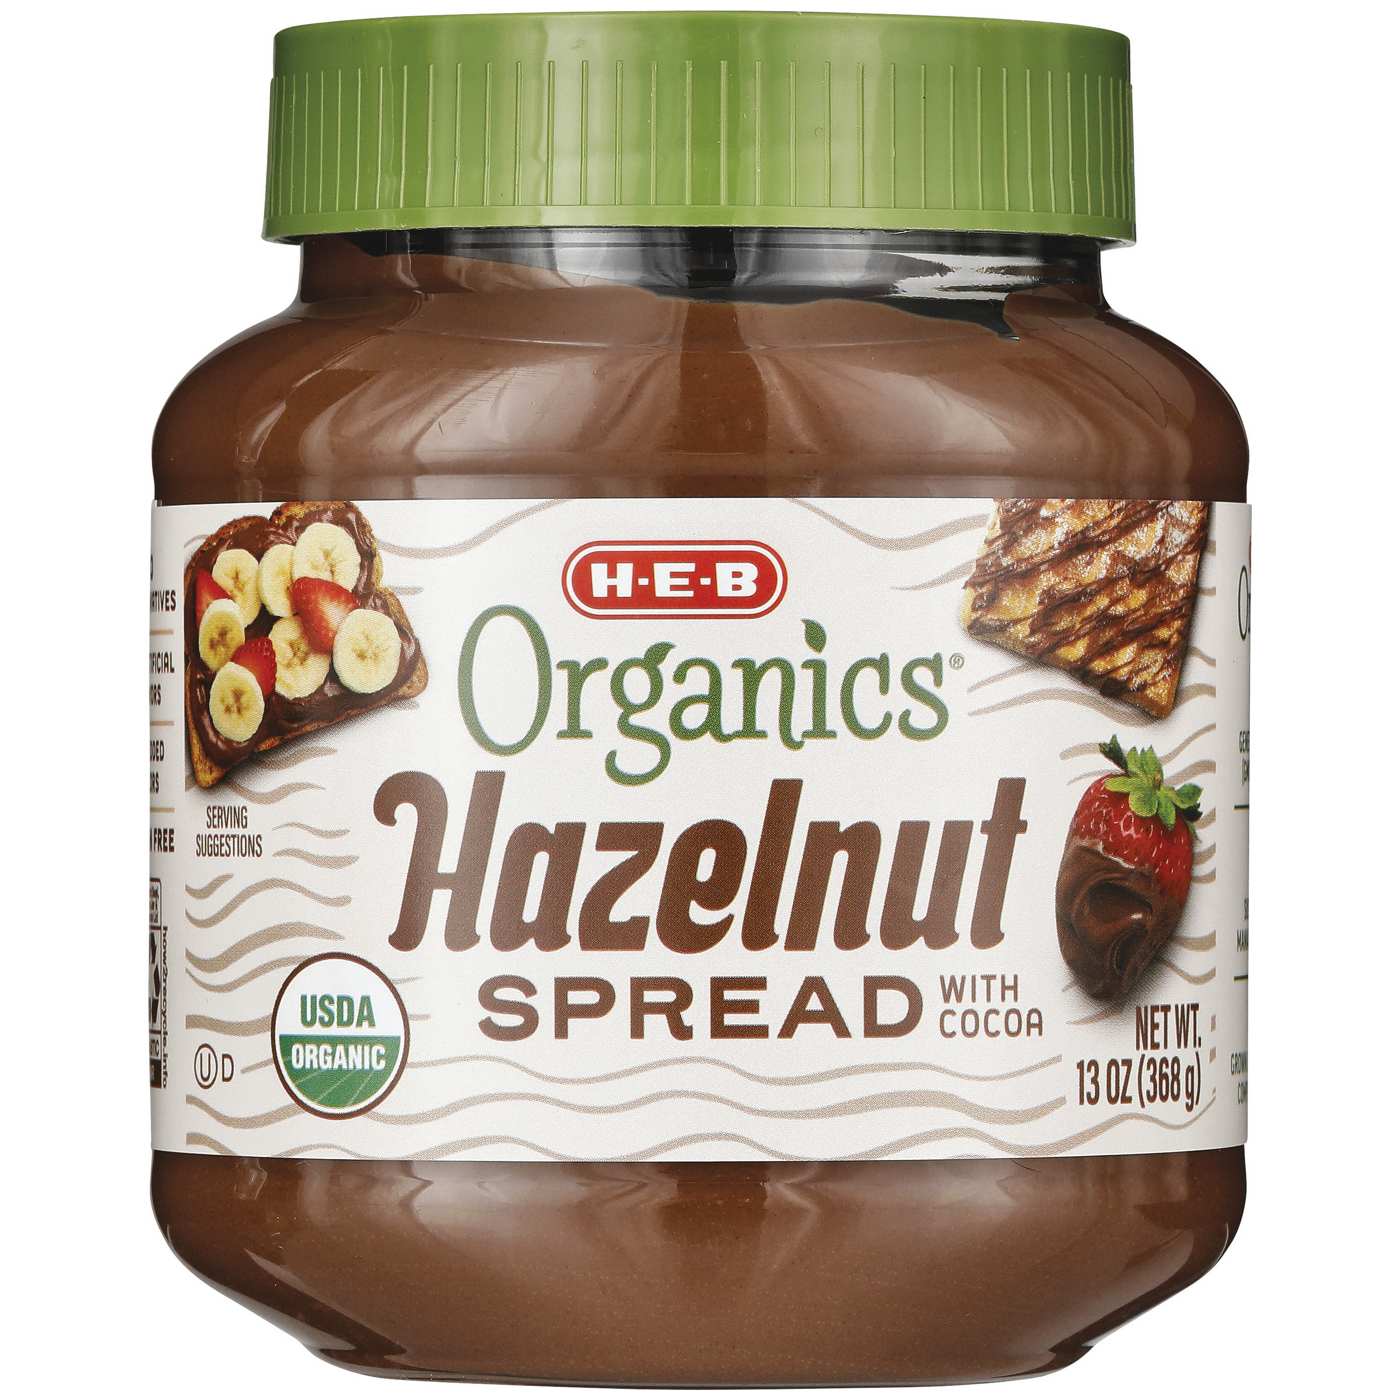 H-E-B Organics Hazelnut Spread with Cocoa; image 1 of 2